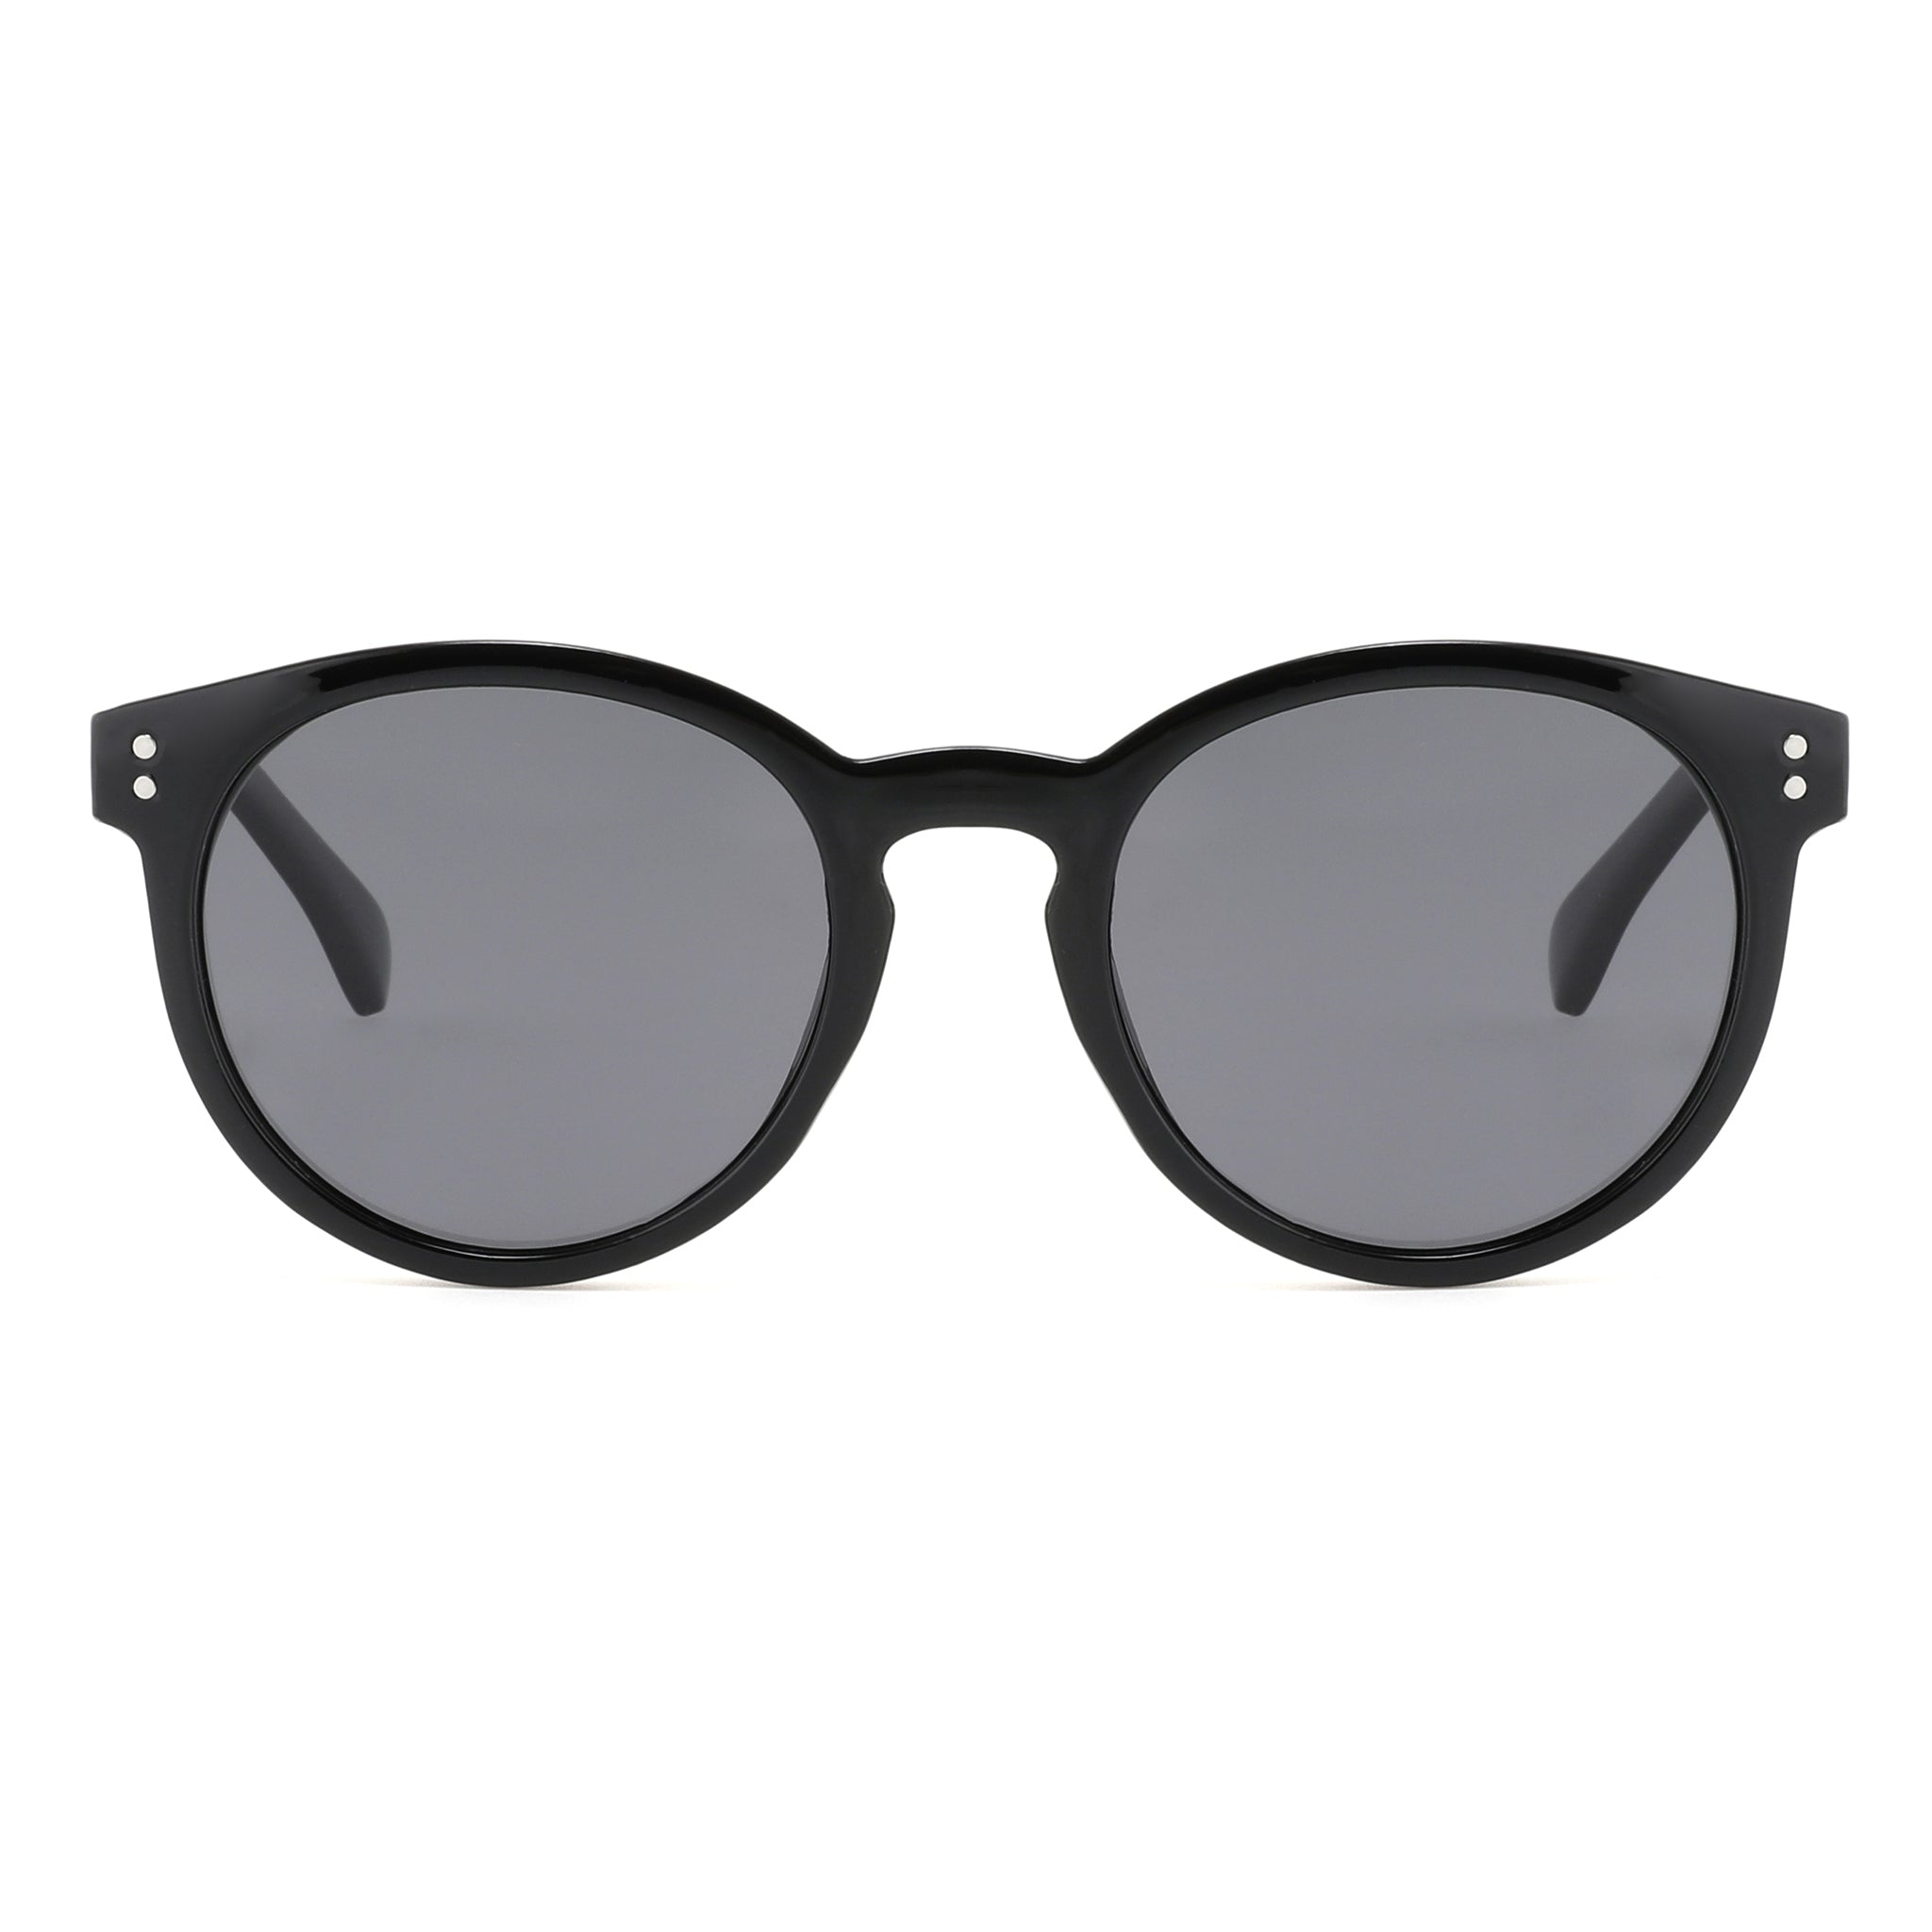 New Yorker Sunglasses Sunglasses in Hong Kong Sunglasses Eco Sunglasses ...